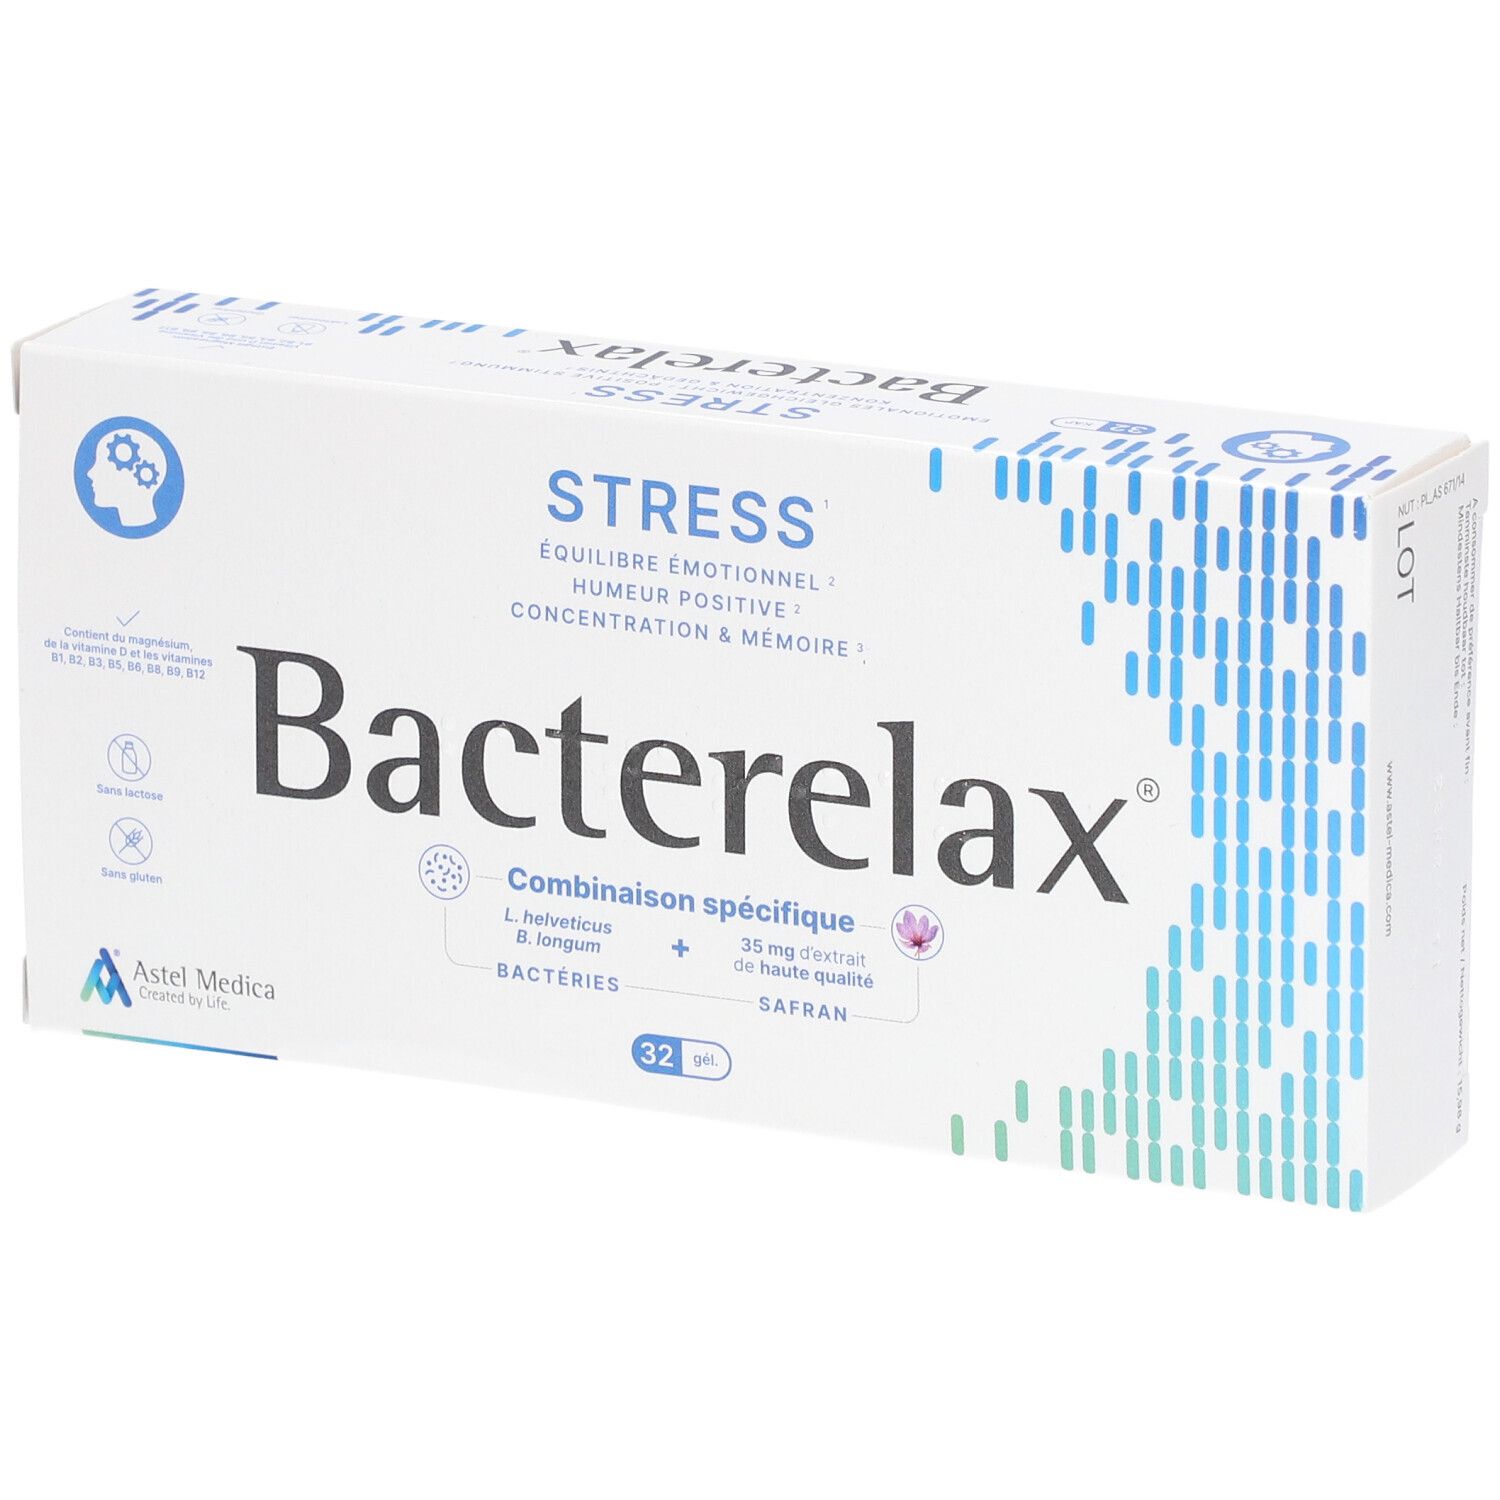 Astel Medica Bacterelax Stress